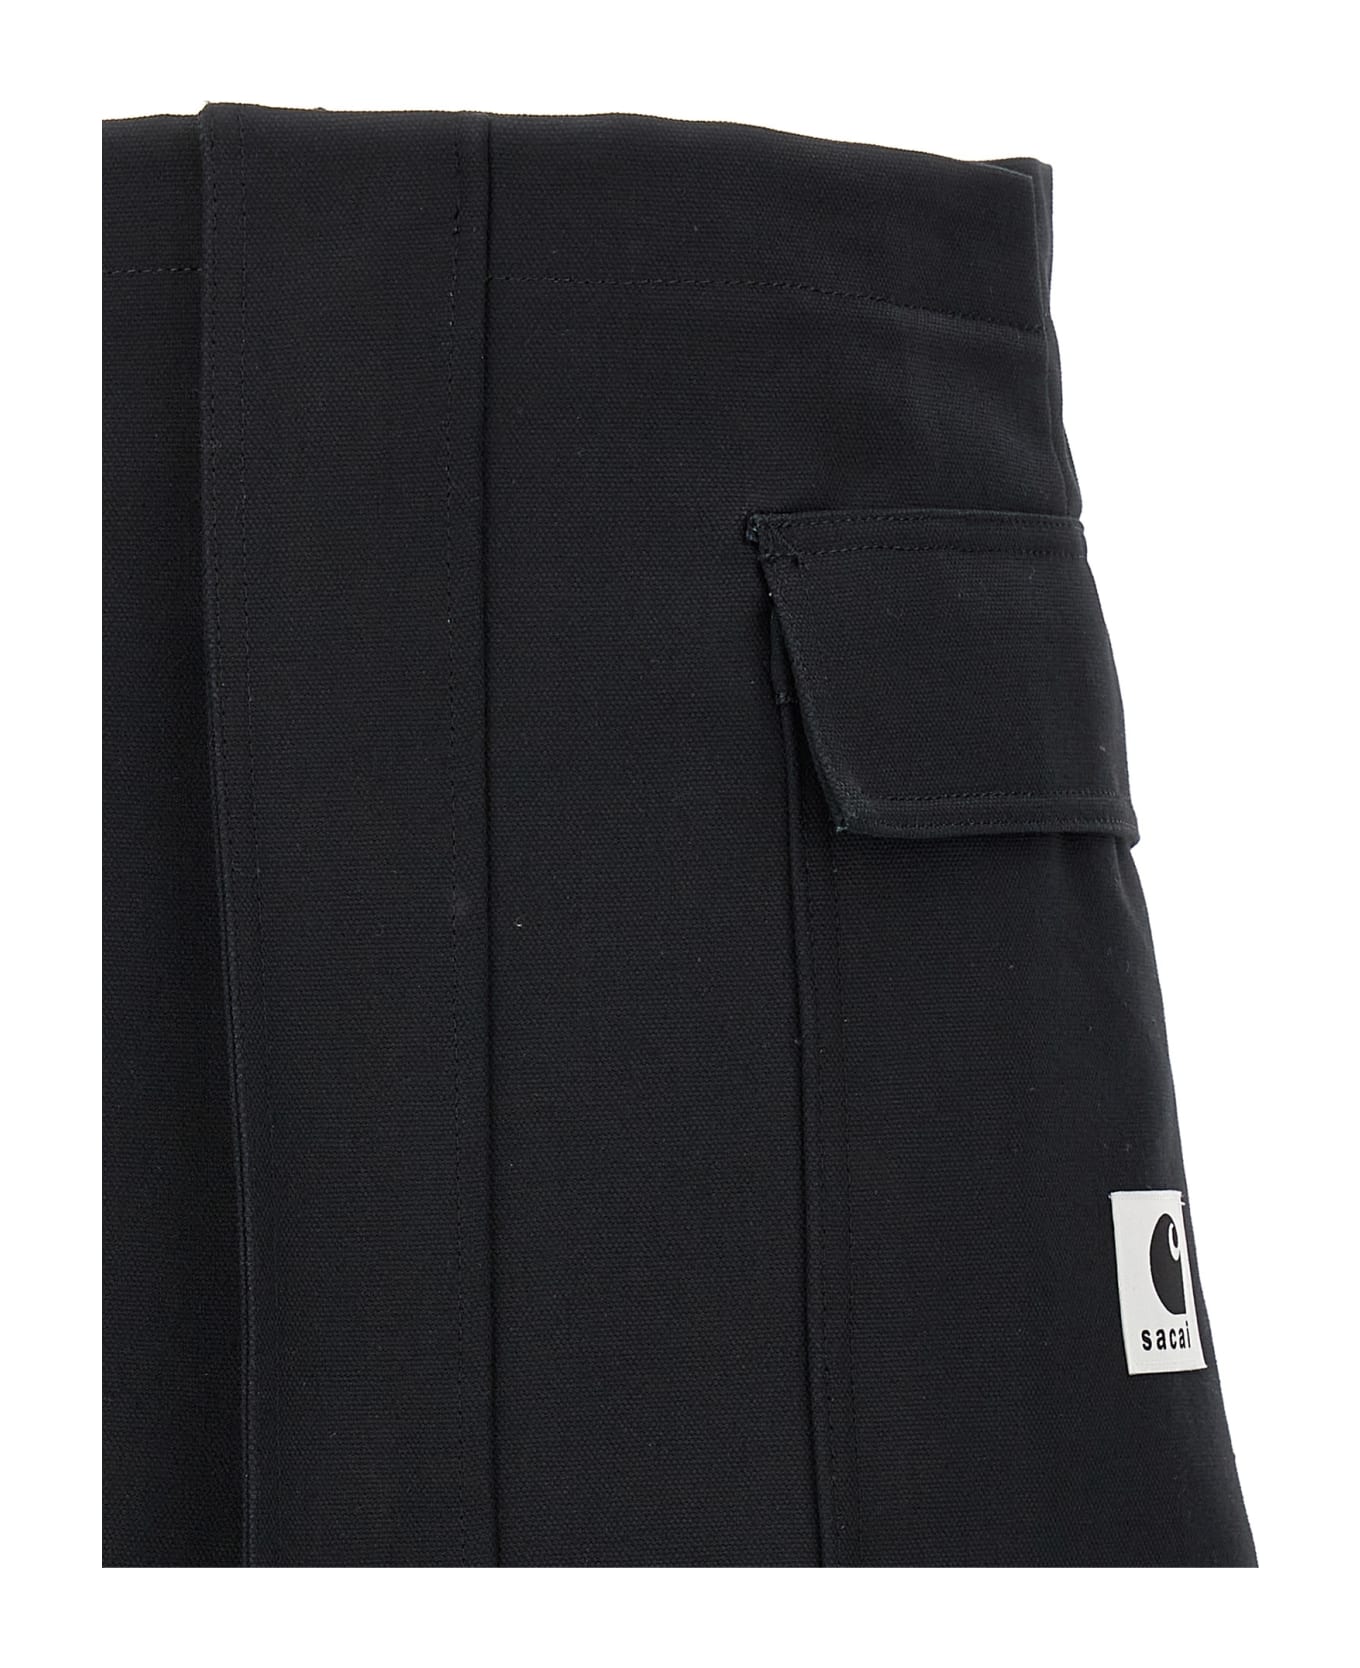 Sacai X Carhartt Wip Shorts - Black   ショートパンツ